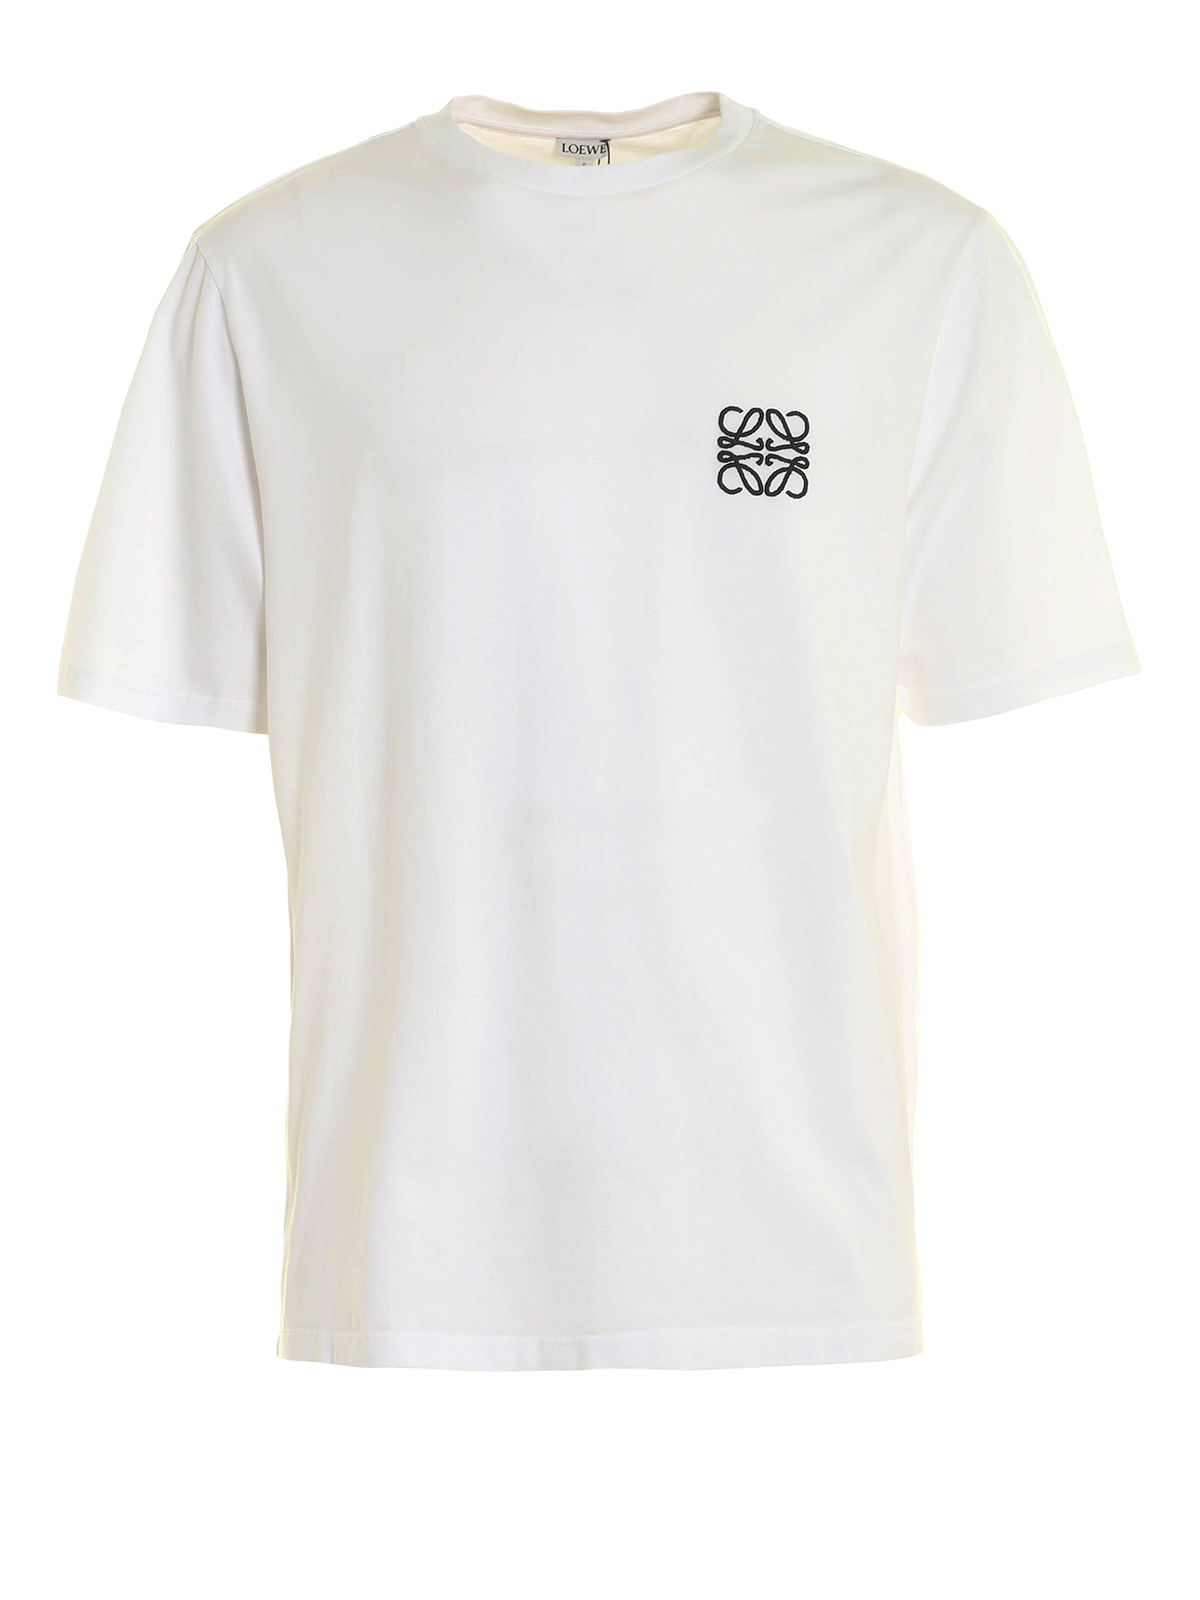 T-shirts Loewe - Embroidered logo T-shirt - H2179680CR2100 | iKRIX.com